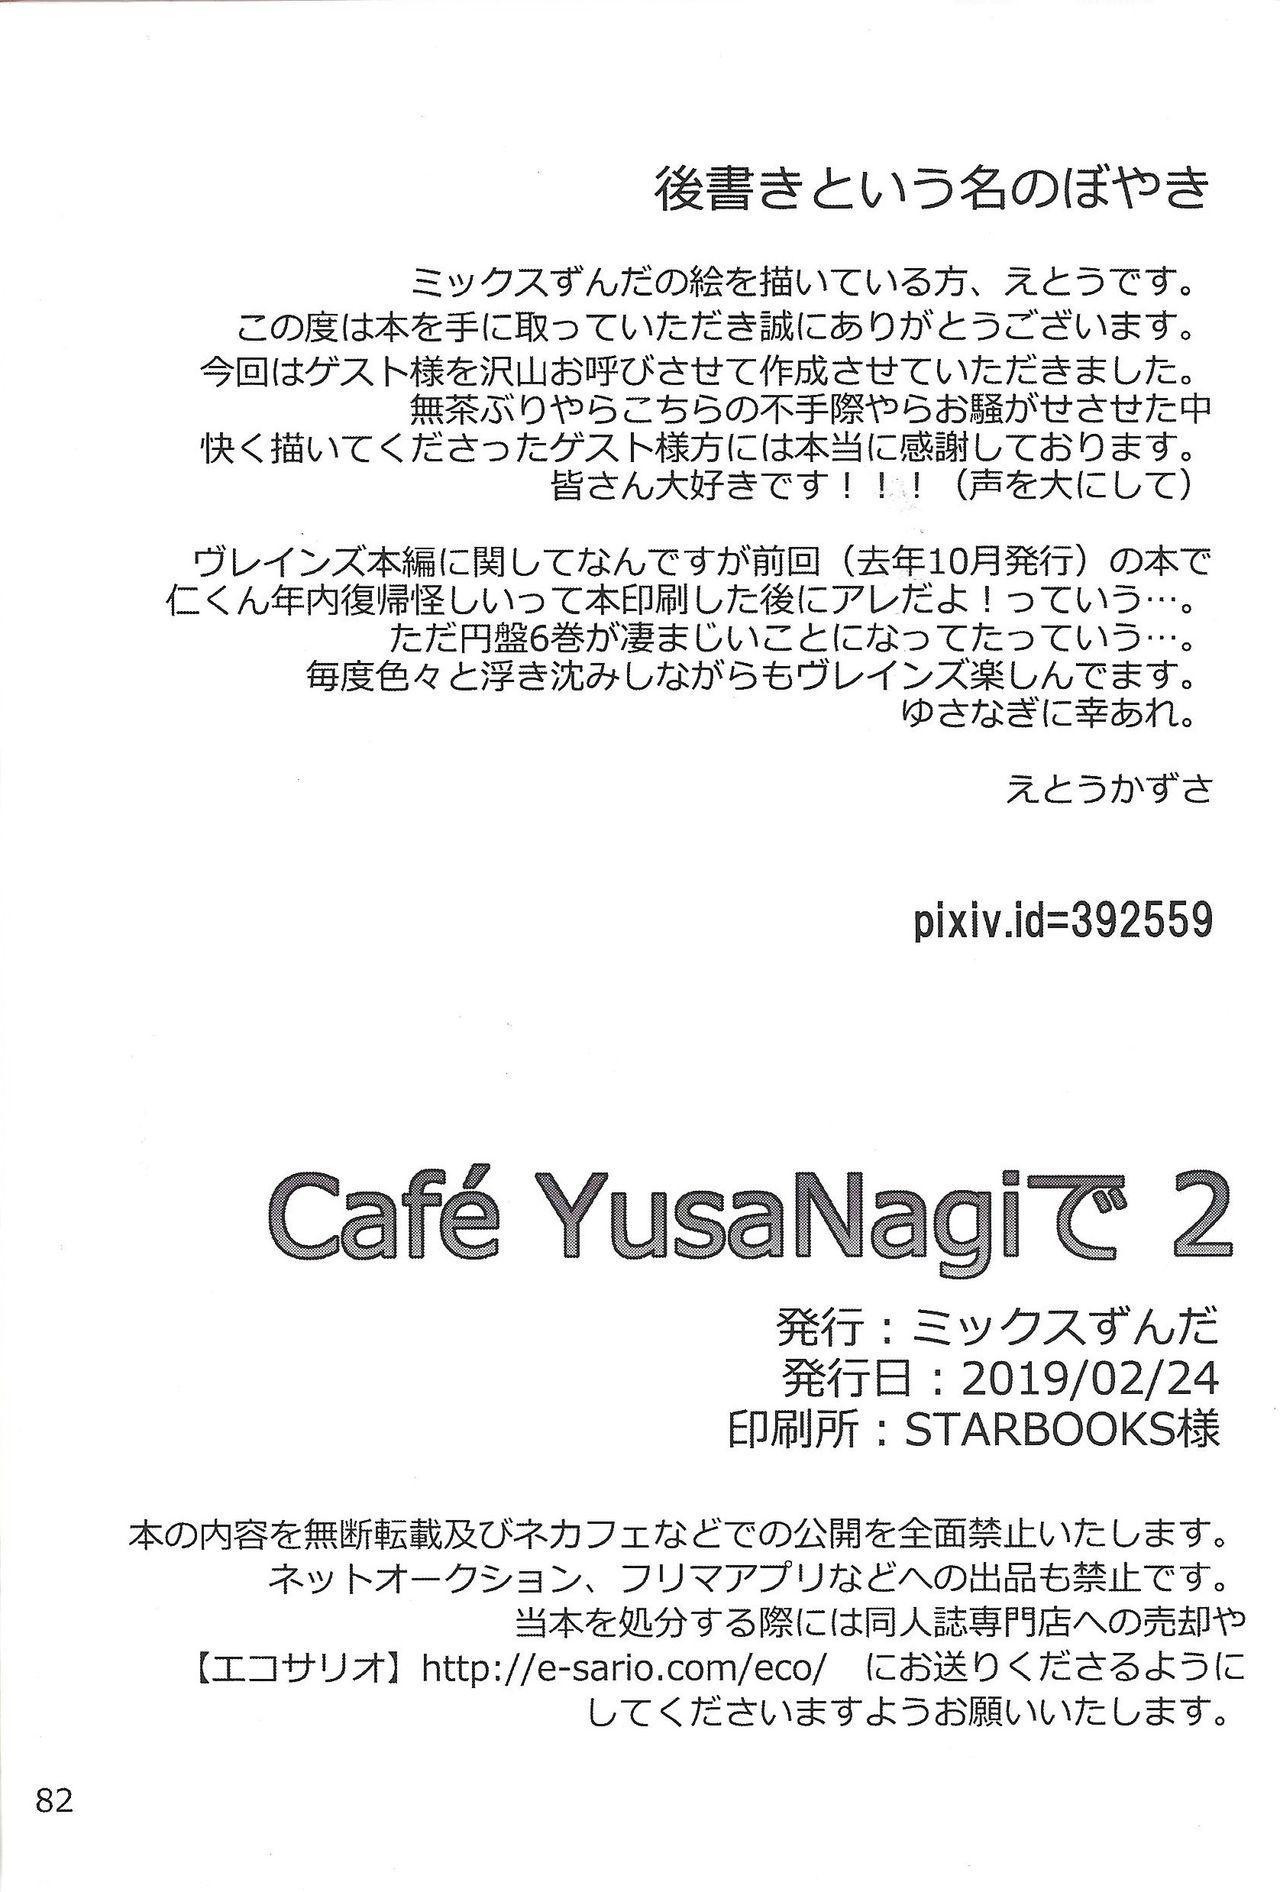 CaféYusaNagi de 2 60